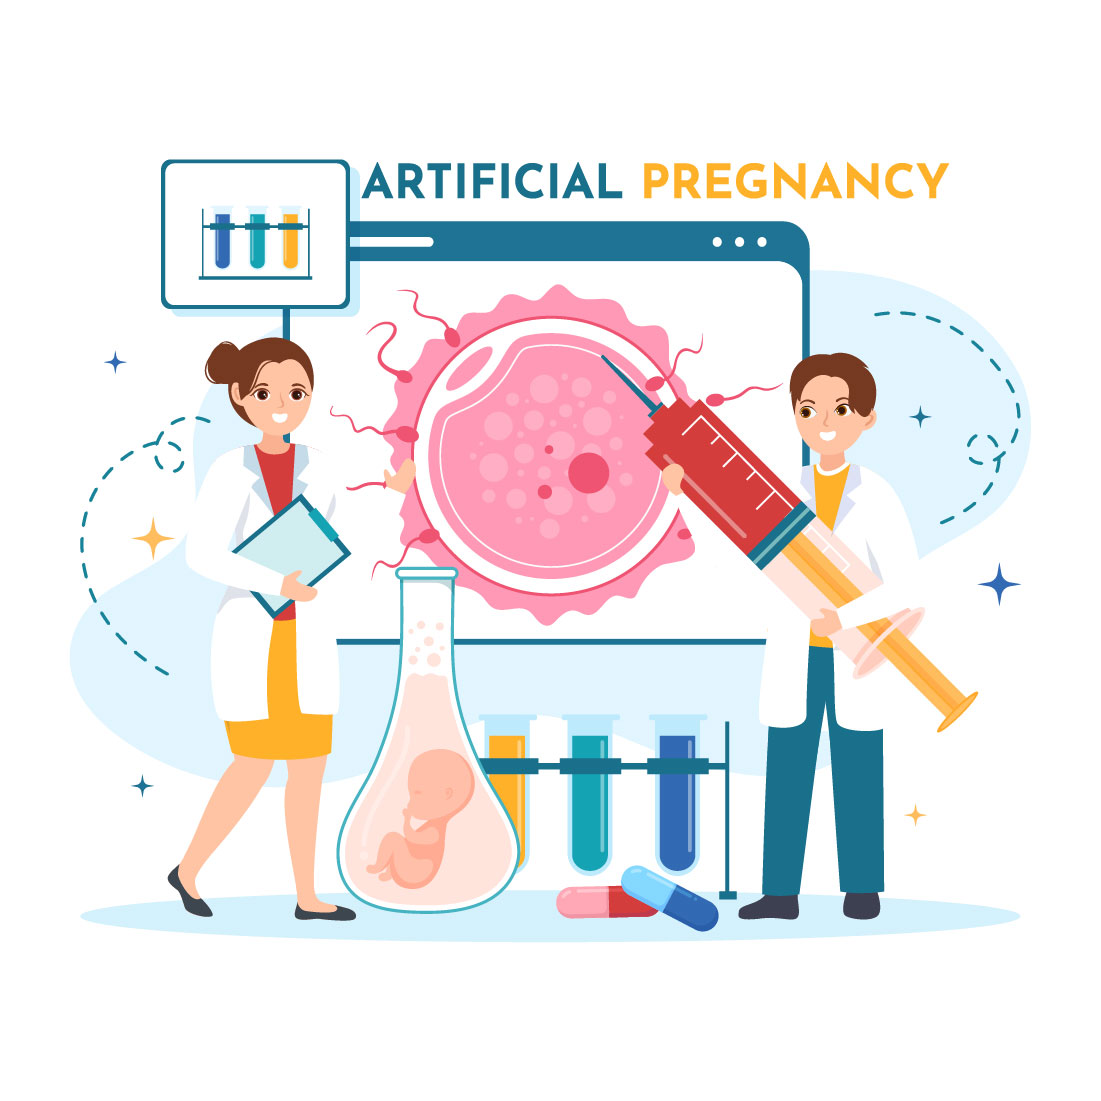 12 Artificial Pregnancy Vector Illustration cover image.